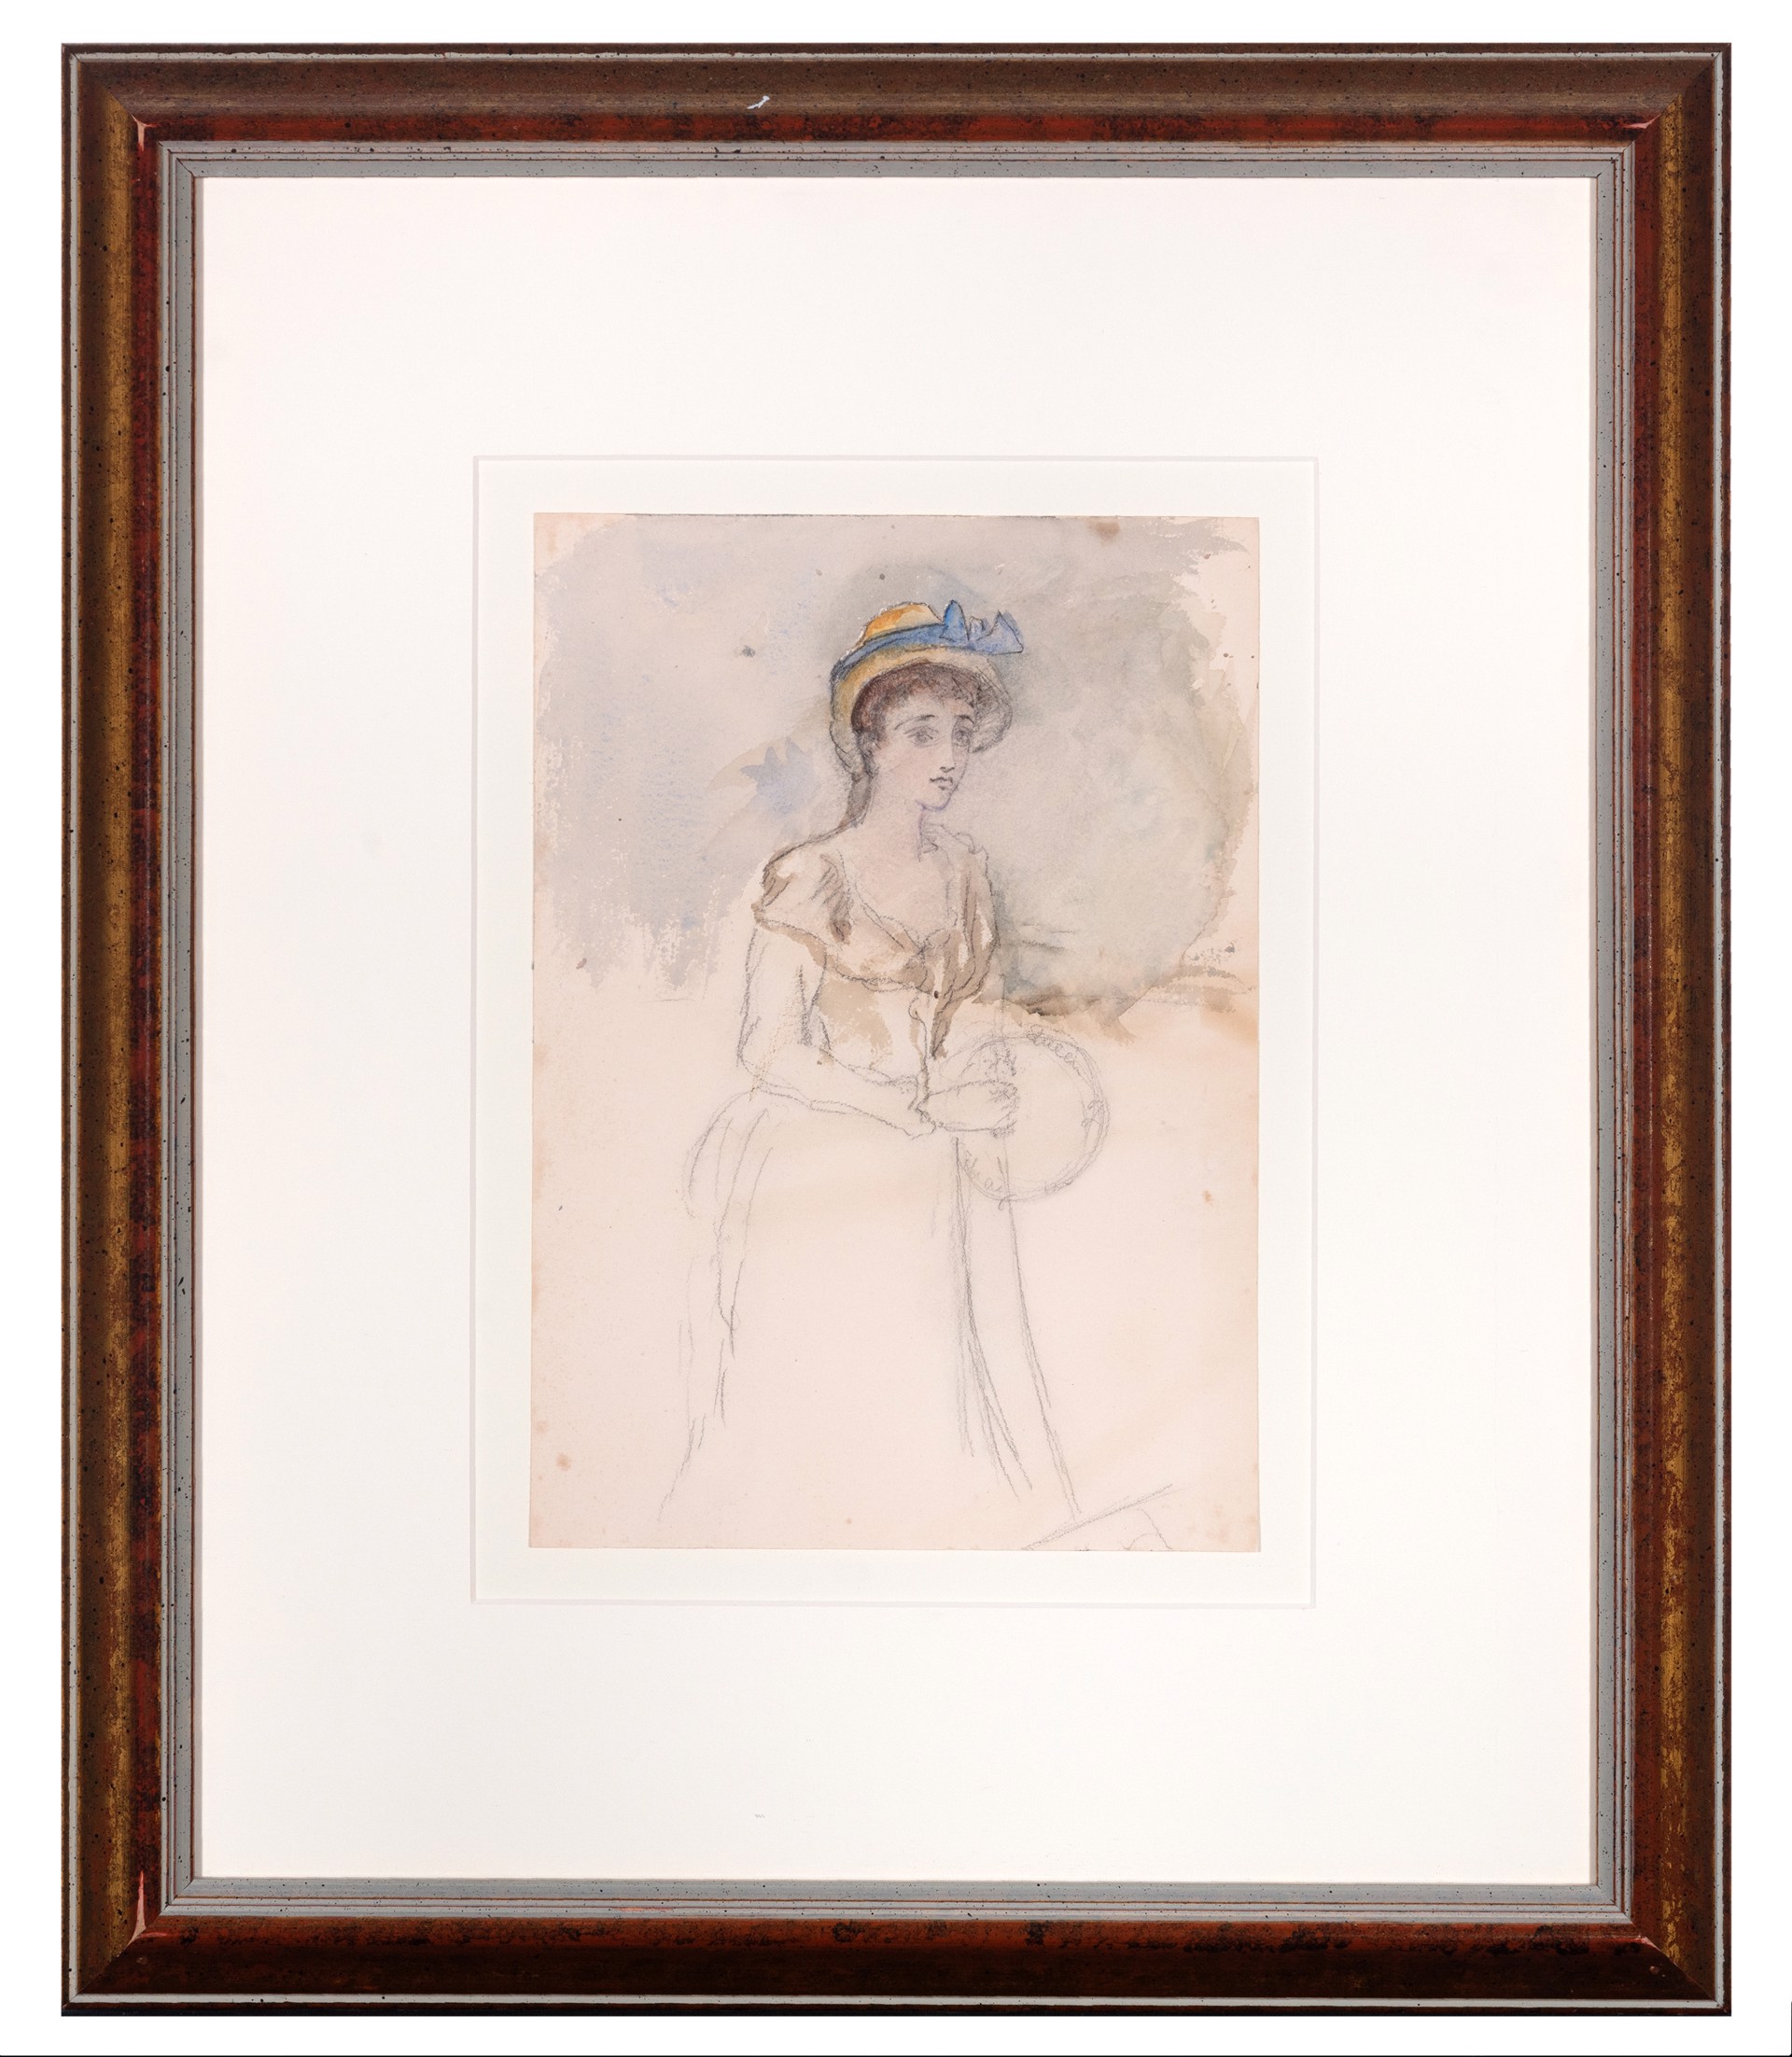 Portrait of Young Woman with Bonnet by Hannah de Rothschild